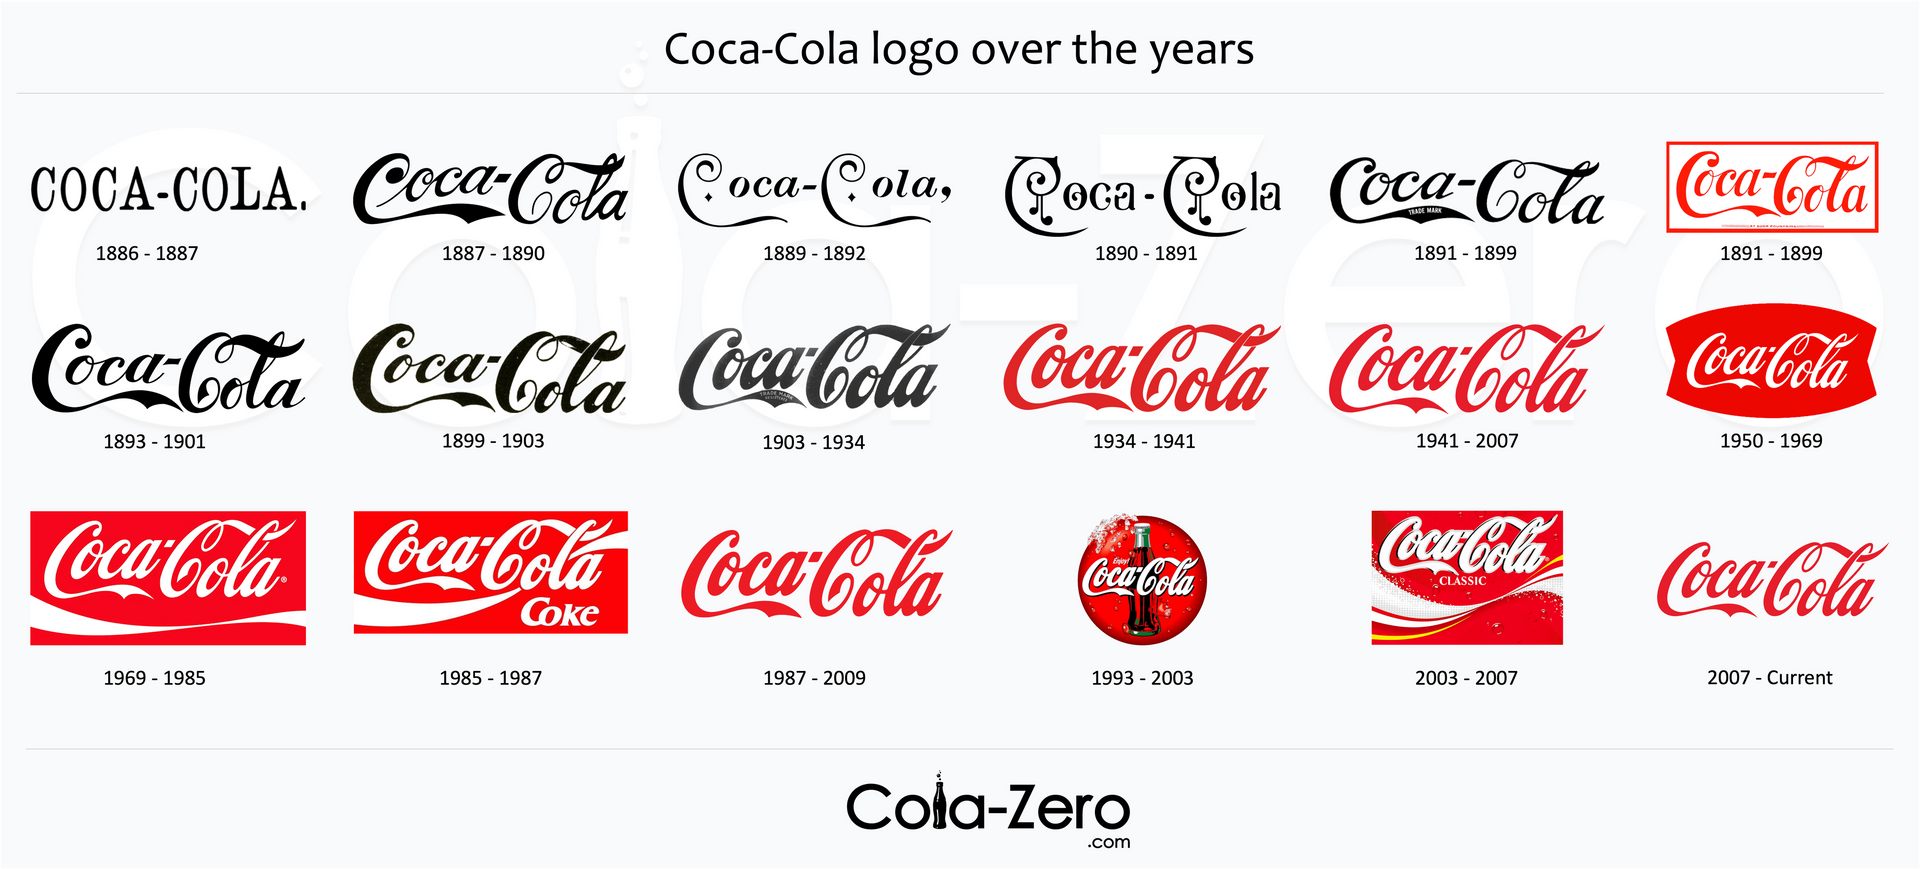 Coca-Cola_Company_Coke_logos-summary_logo-evolution-over-the-years_summary_design_history_1886-current_black-red-white_Cola-Zero.com_18-NEW